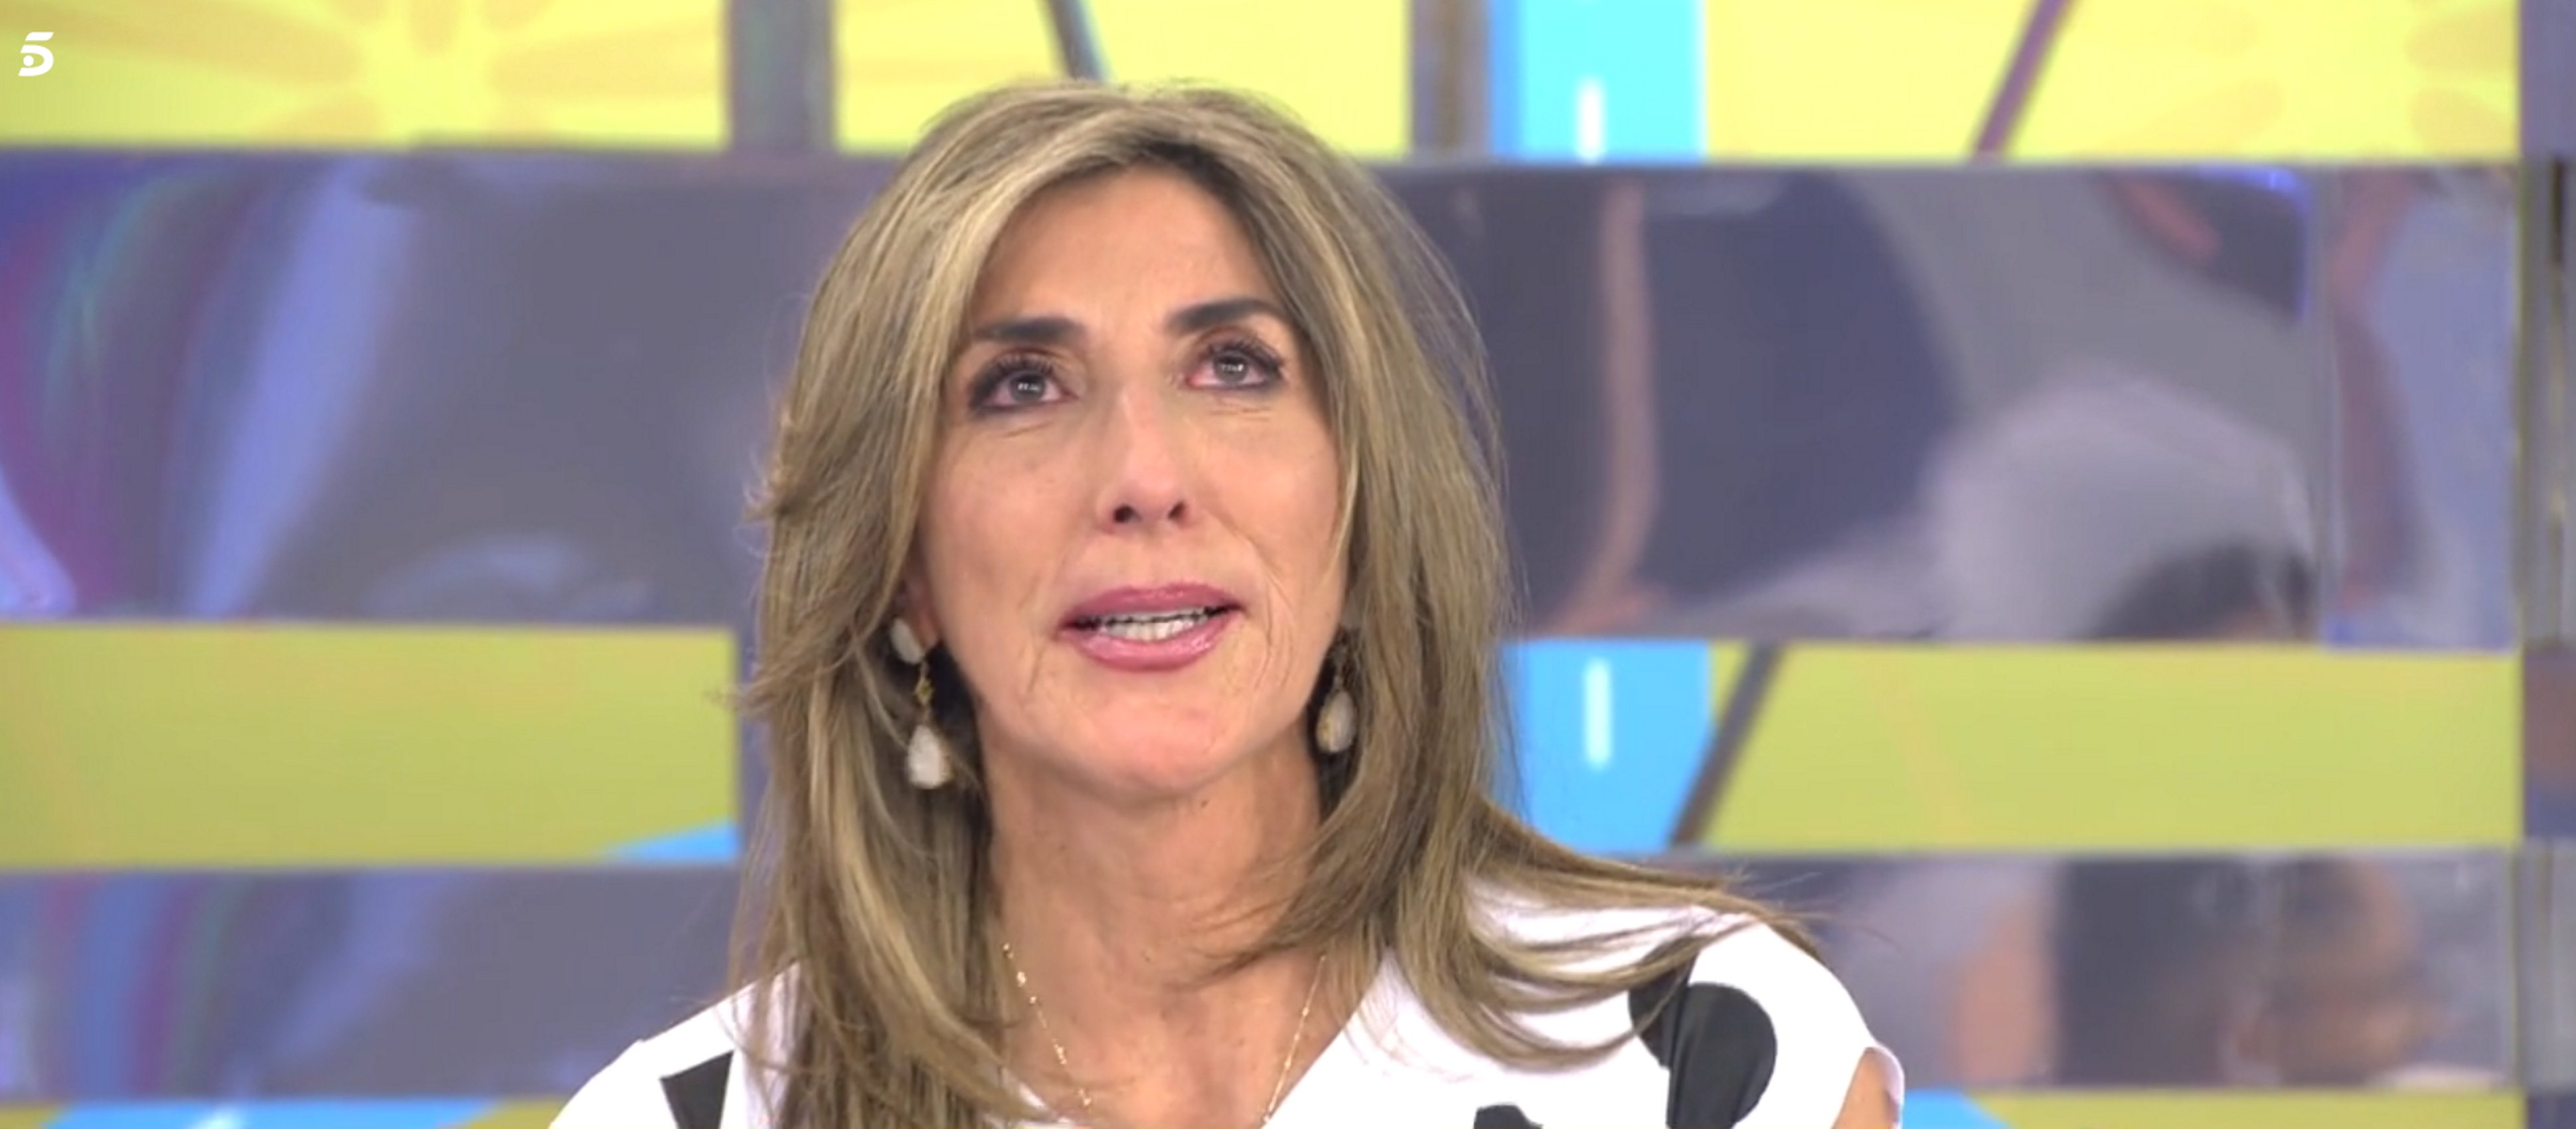 Paz Padilla arraconada a Telecinco: la fan fora d'un altre programa